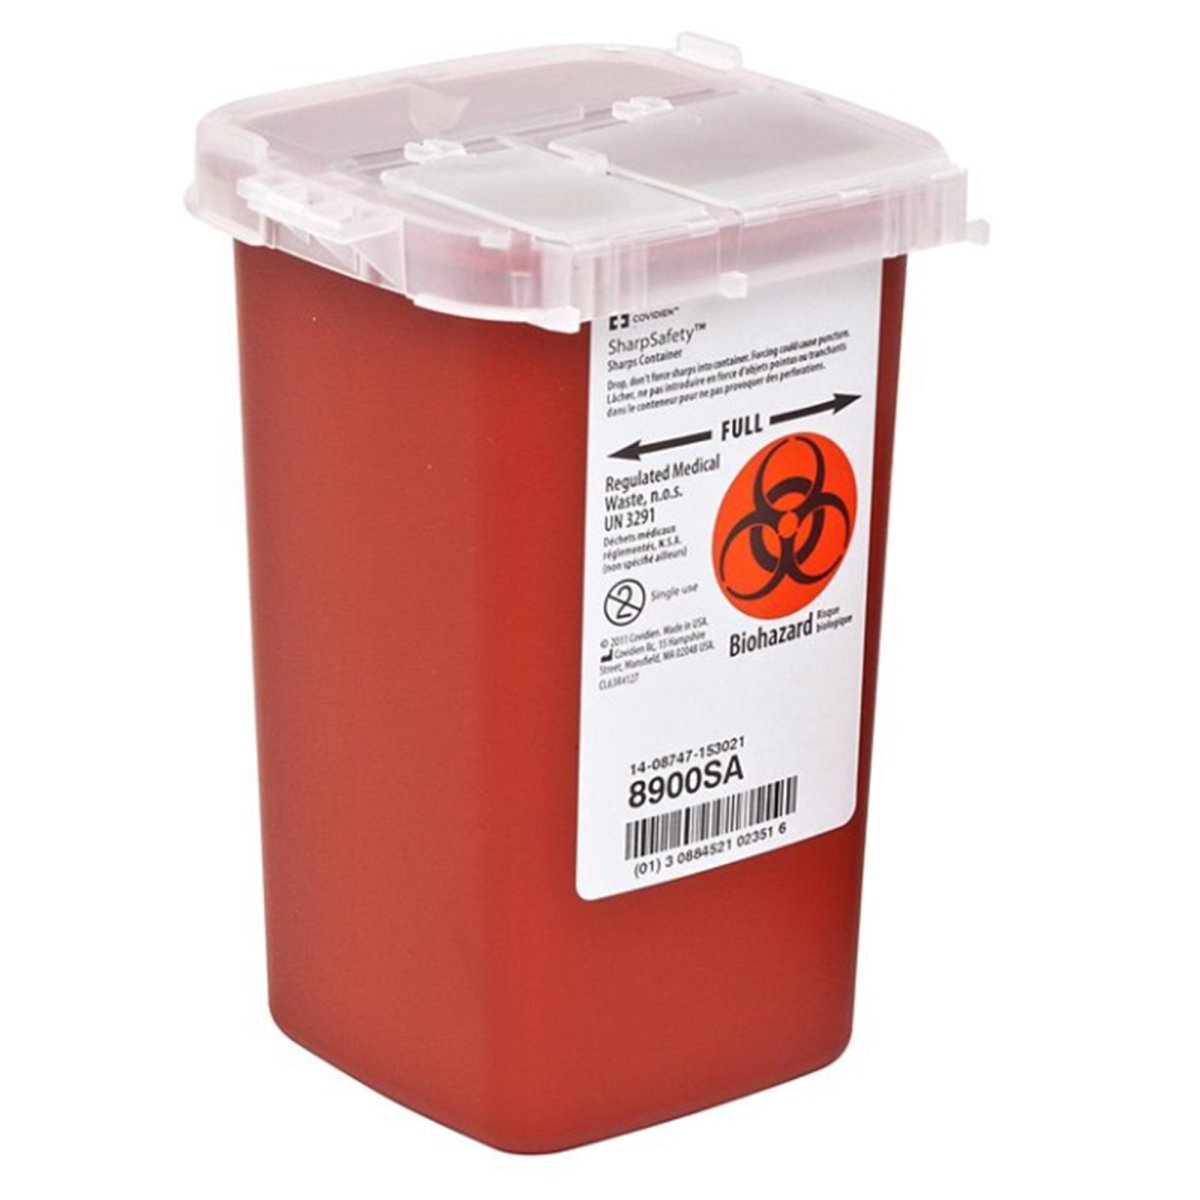 Sharpsafety Phlebotomy Sharps Container - 149371_CS - 1